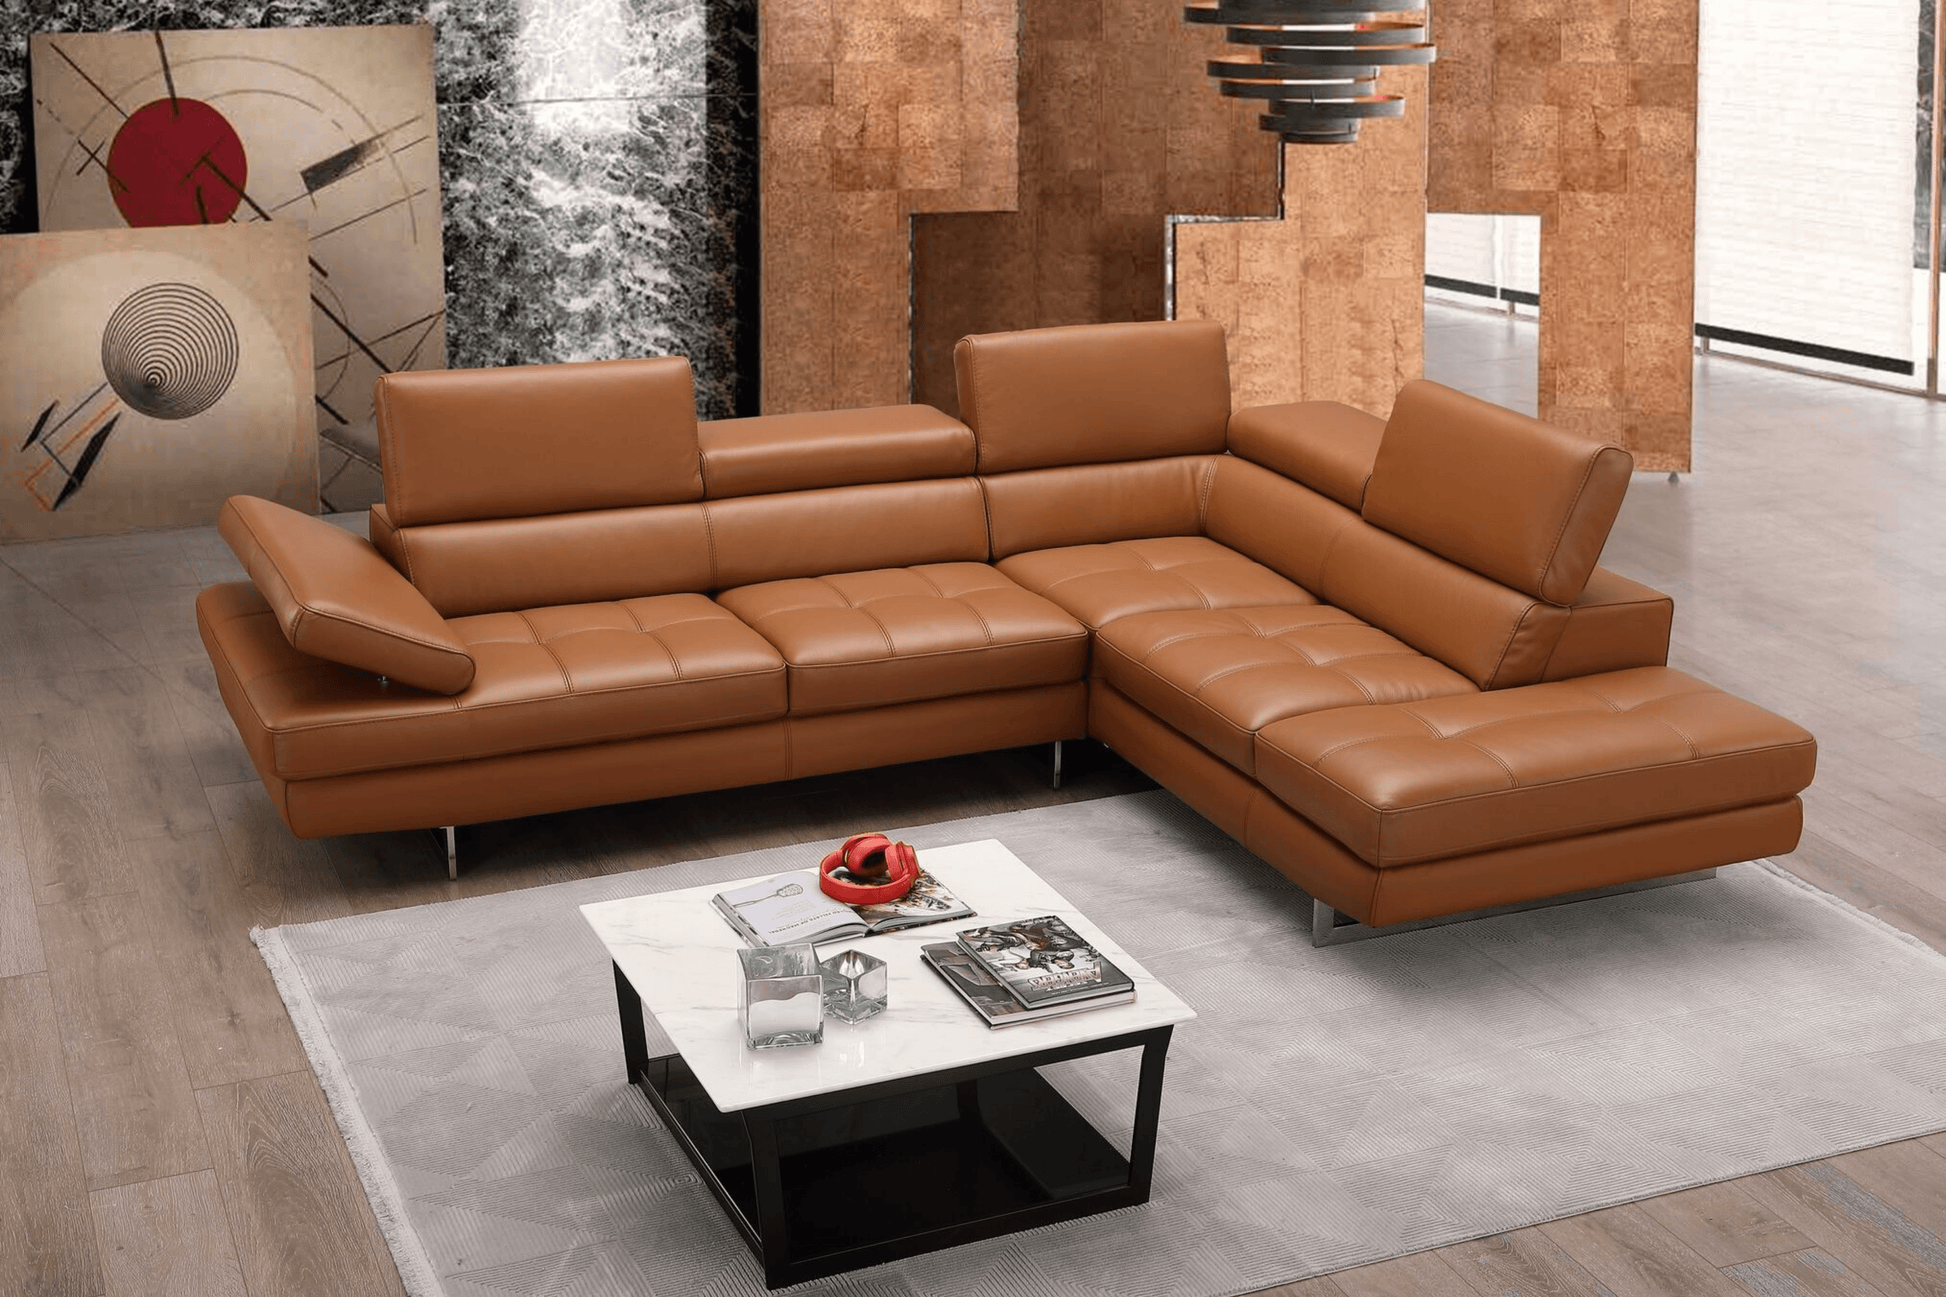 A761 Italian Leather Sectional in Caramel - Venini Furniture 